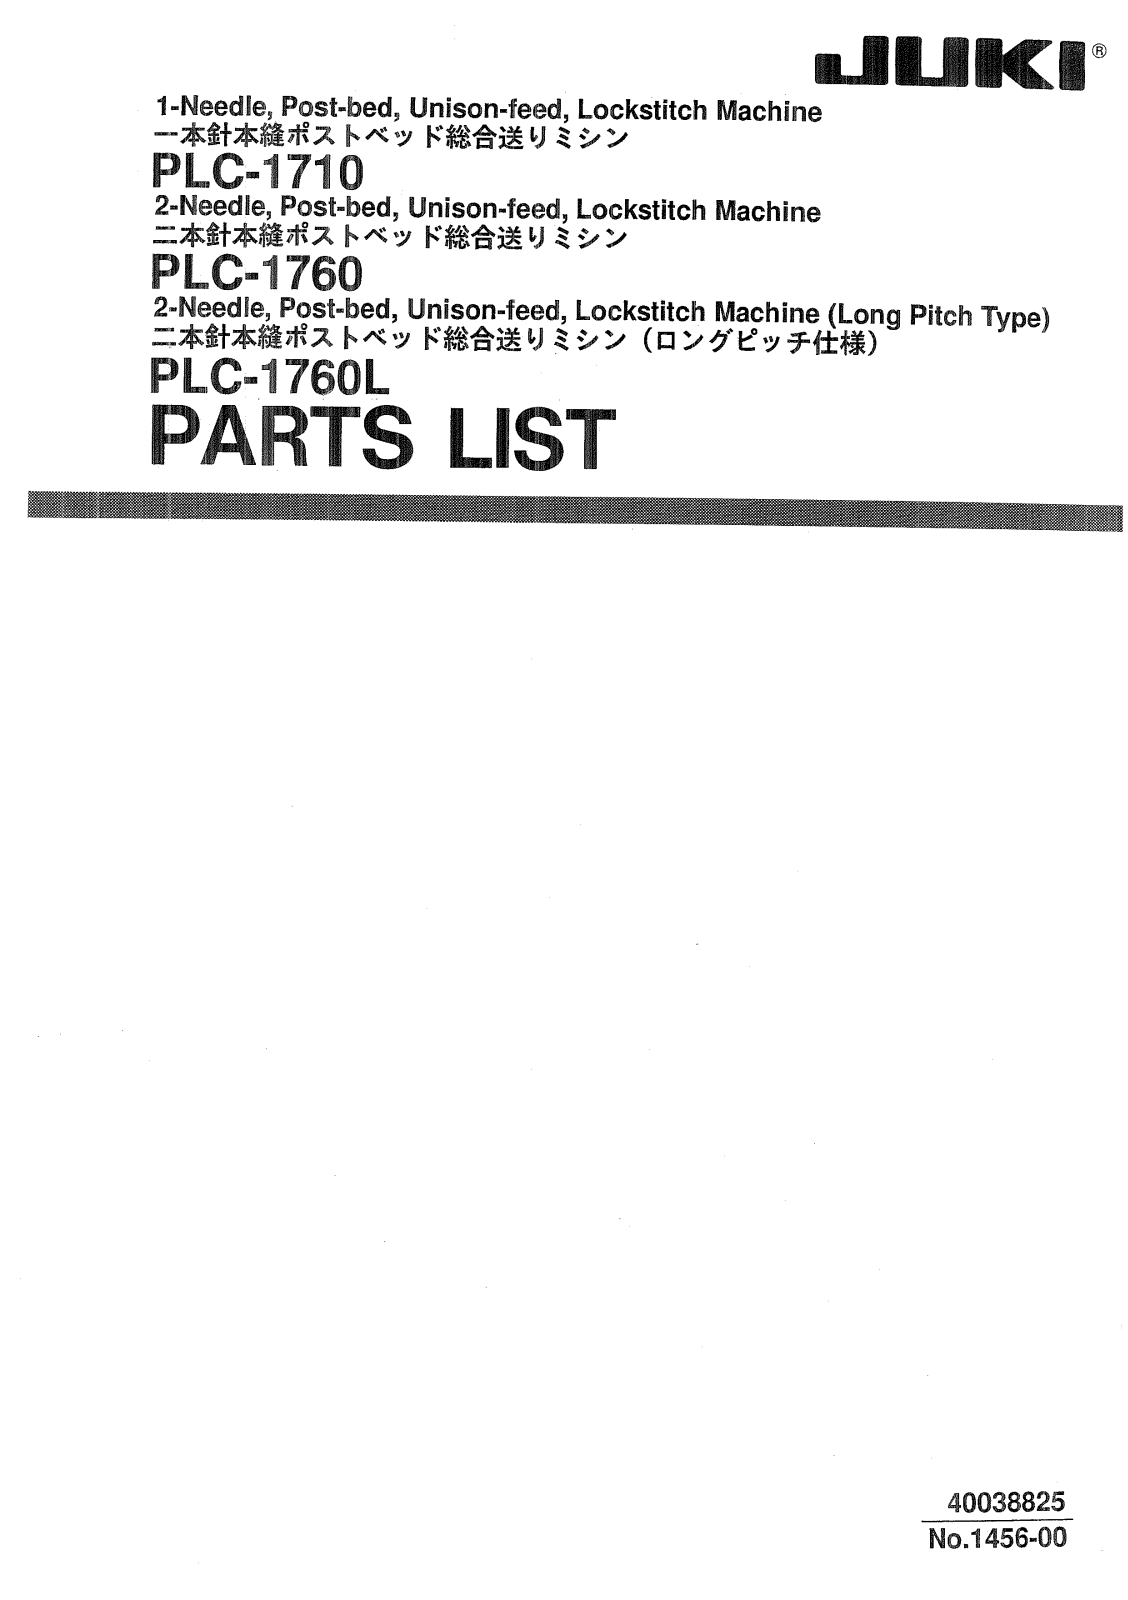 Juki PLC-1710, PLC-1760, PLC-1760L Parts List